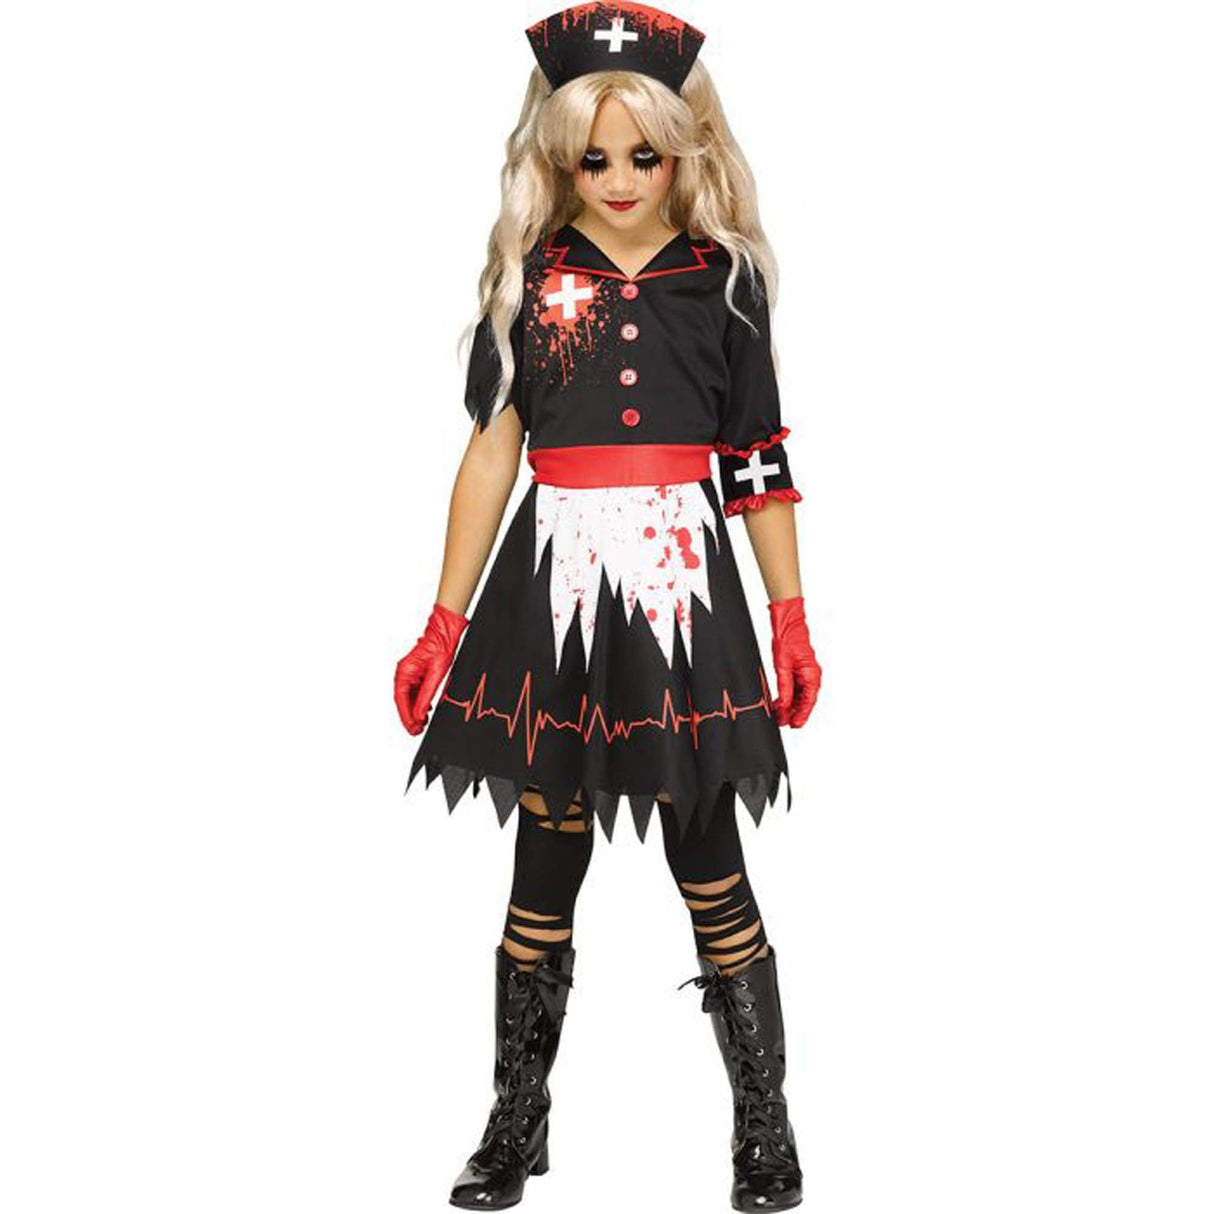 FUN WORLD Costumes Not So Nice Nurse Costume for Kids, Black Dress